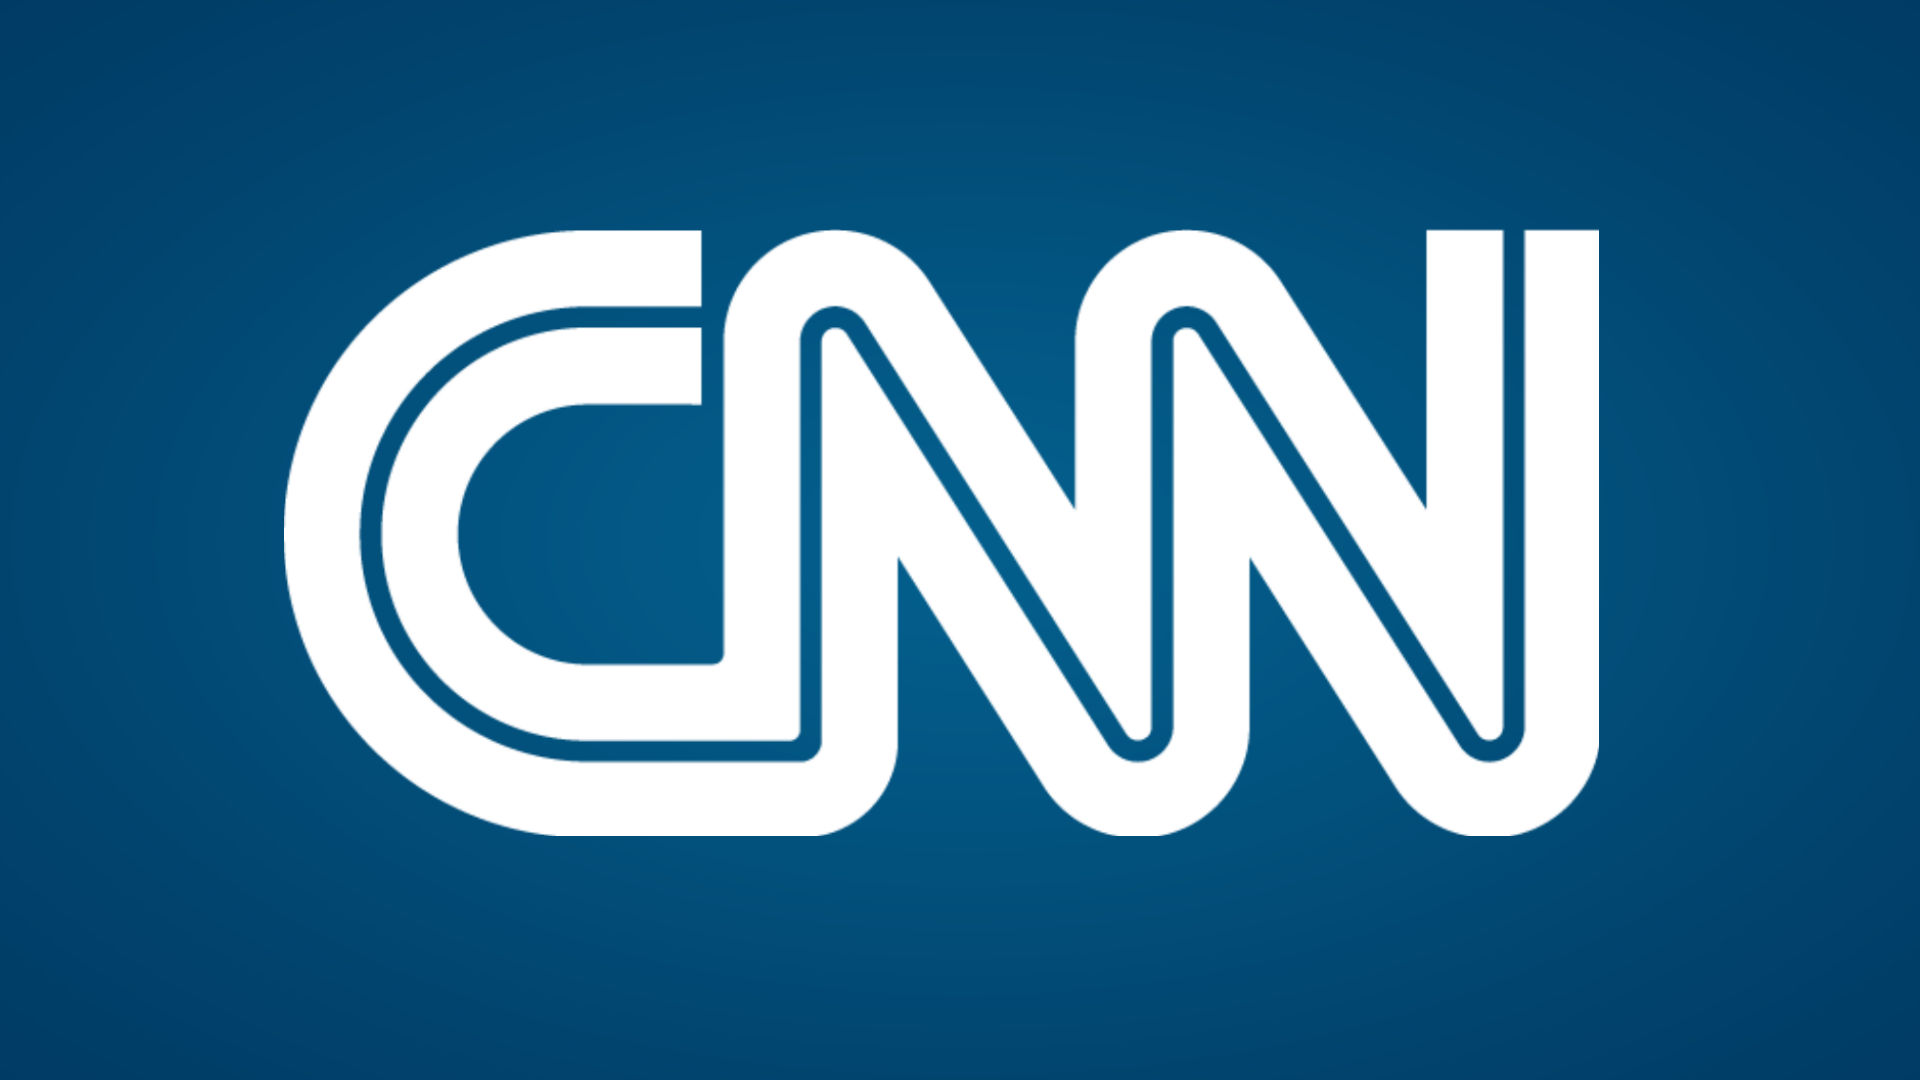 Cnn live. CNN. CNN эмблема. Канал СНН. CNN картинки.